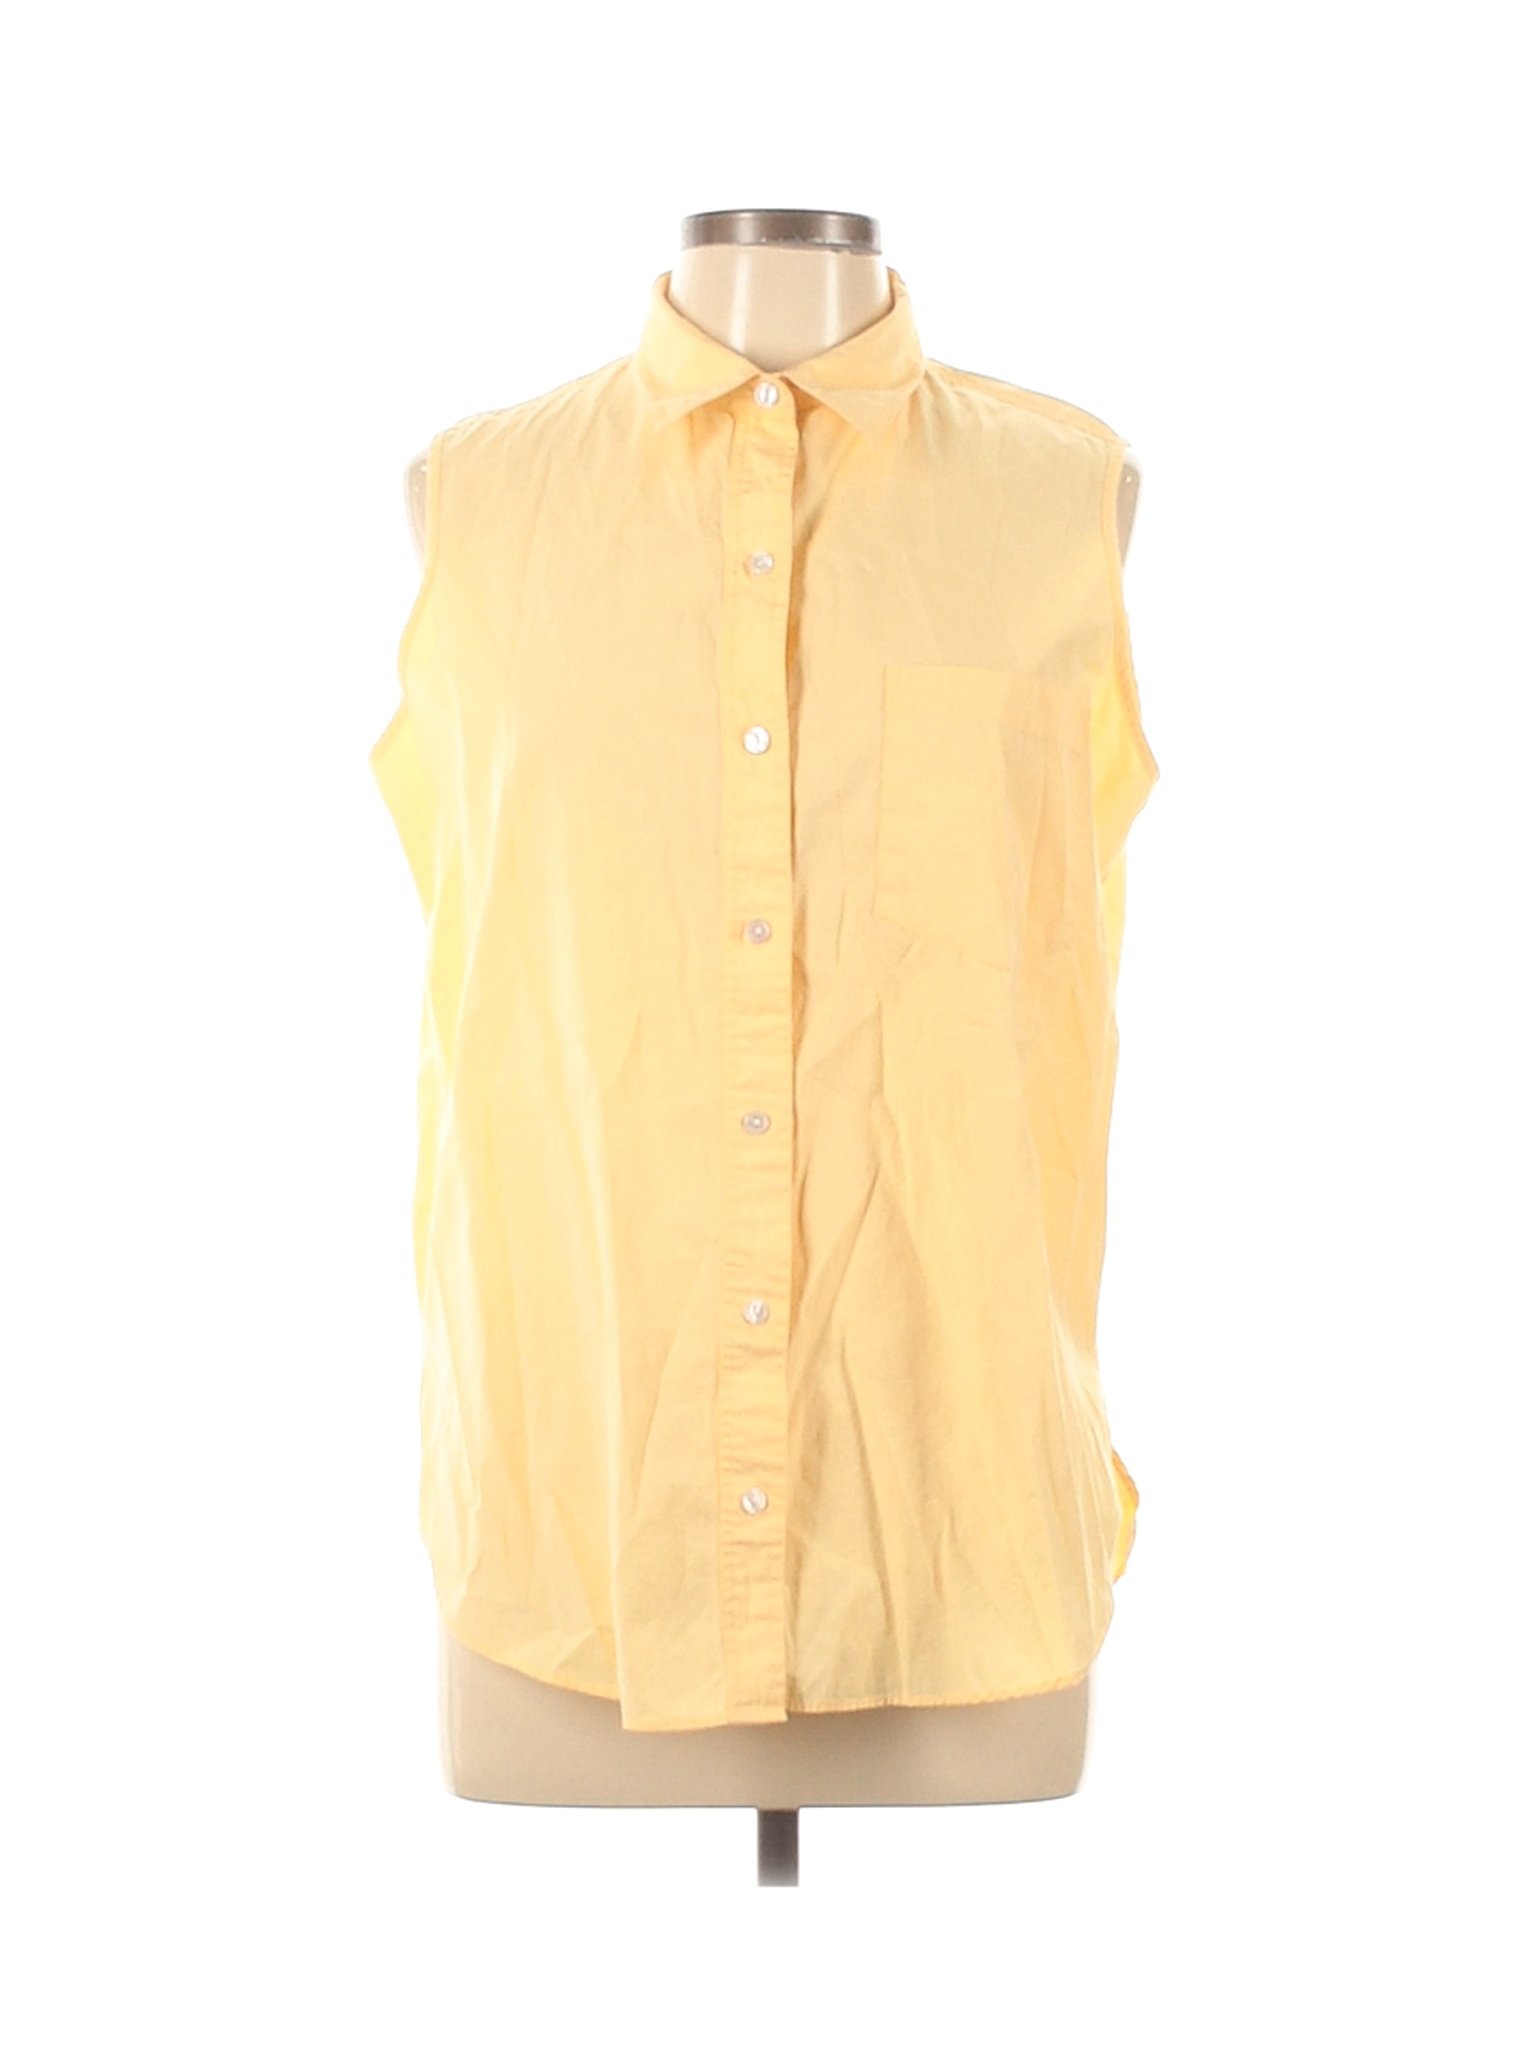 L.L.Bean Women Yellow Sleeveless Button-Down Shirt L | eBay